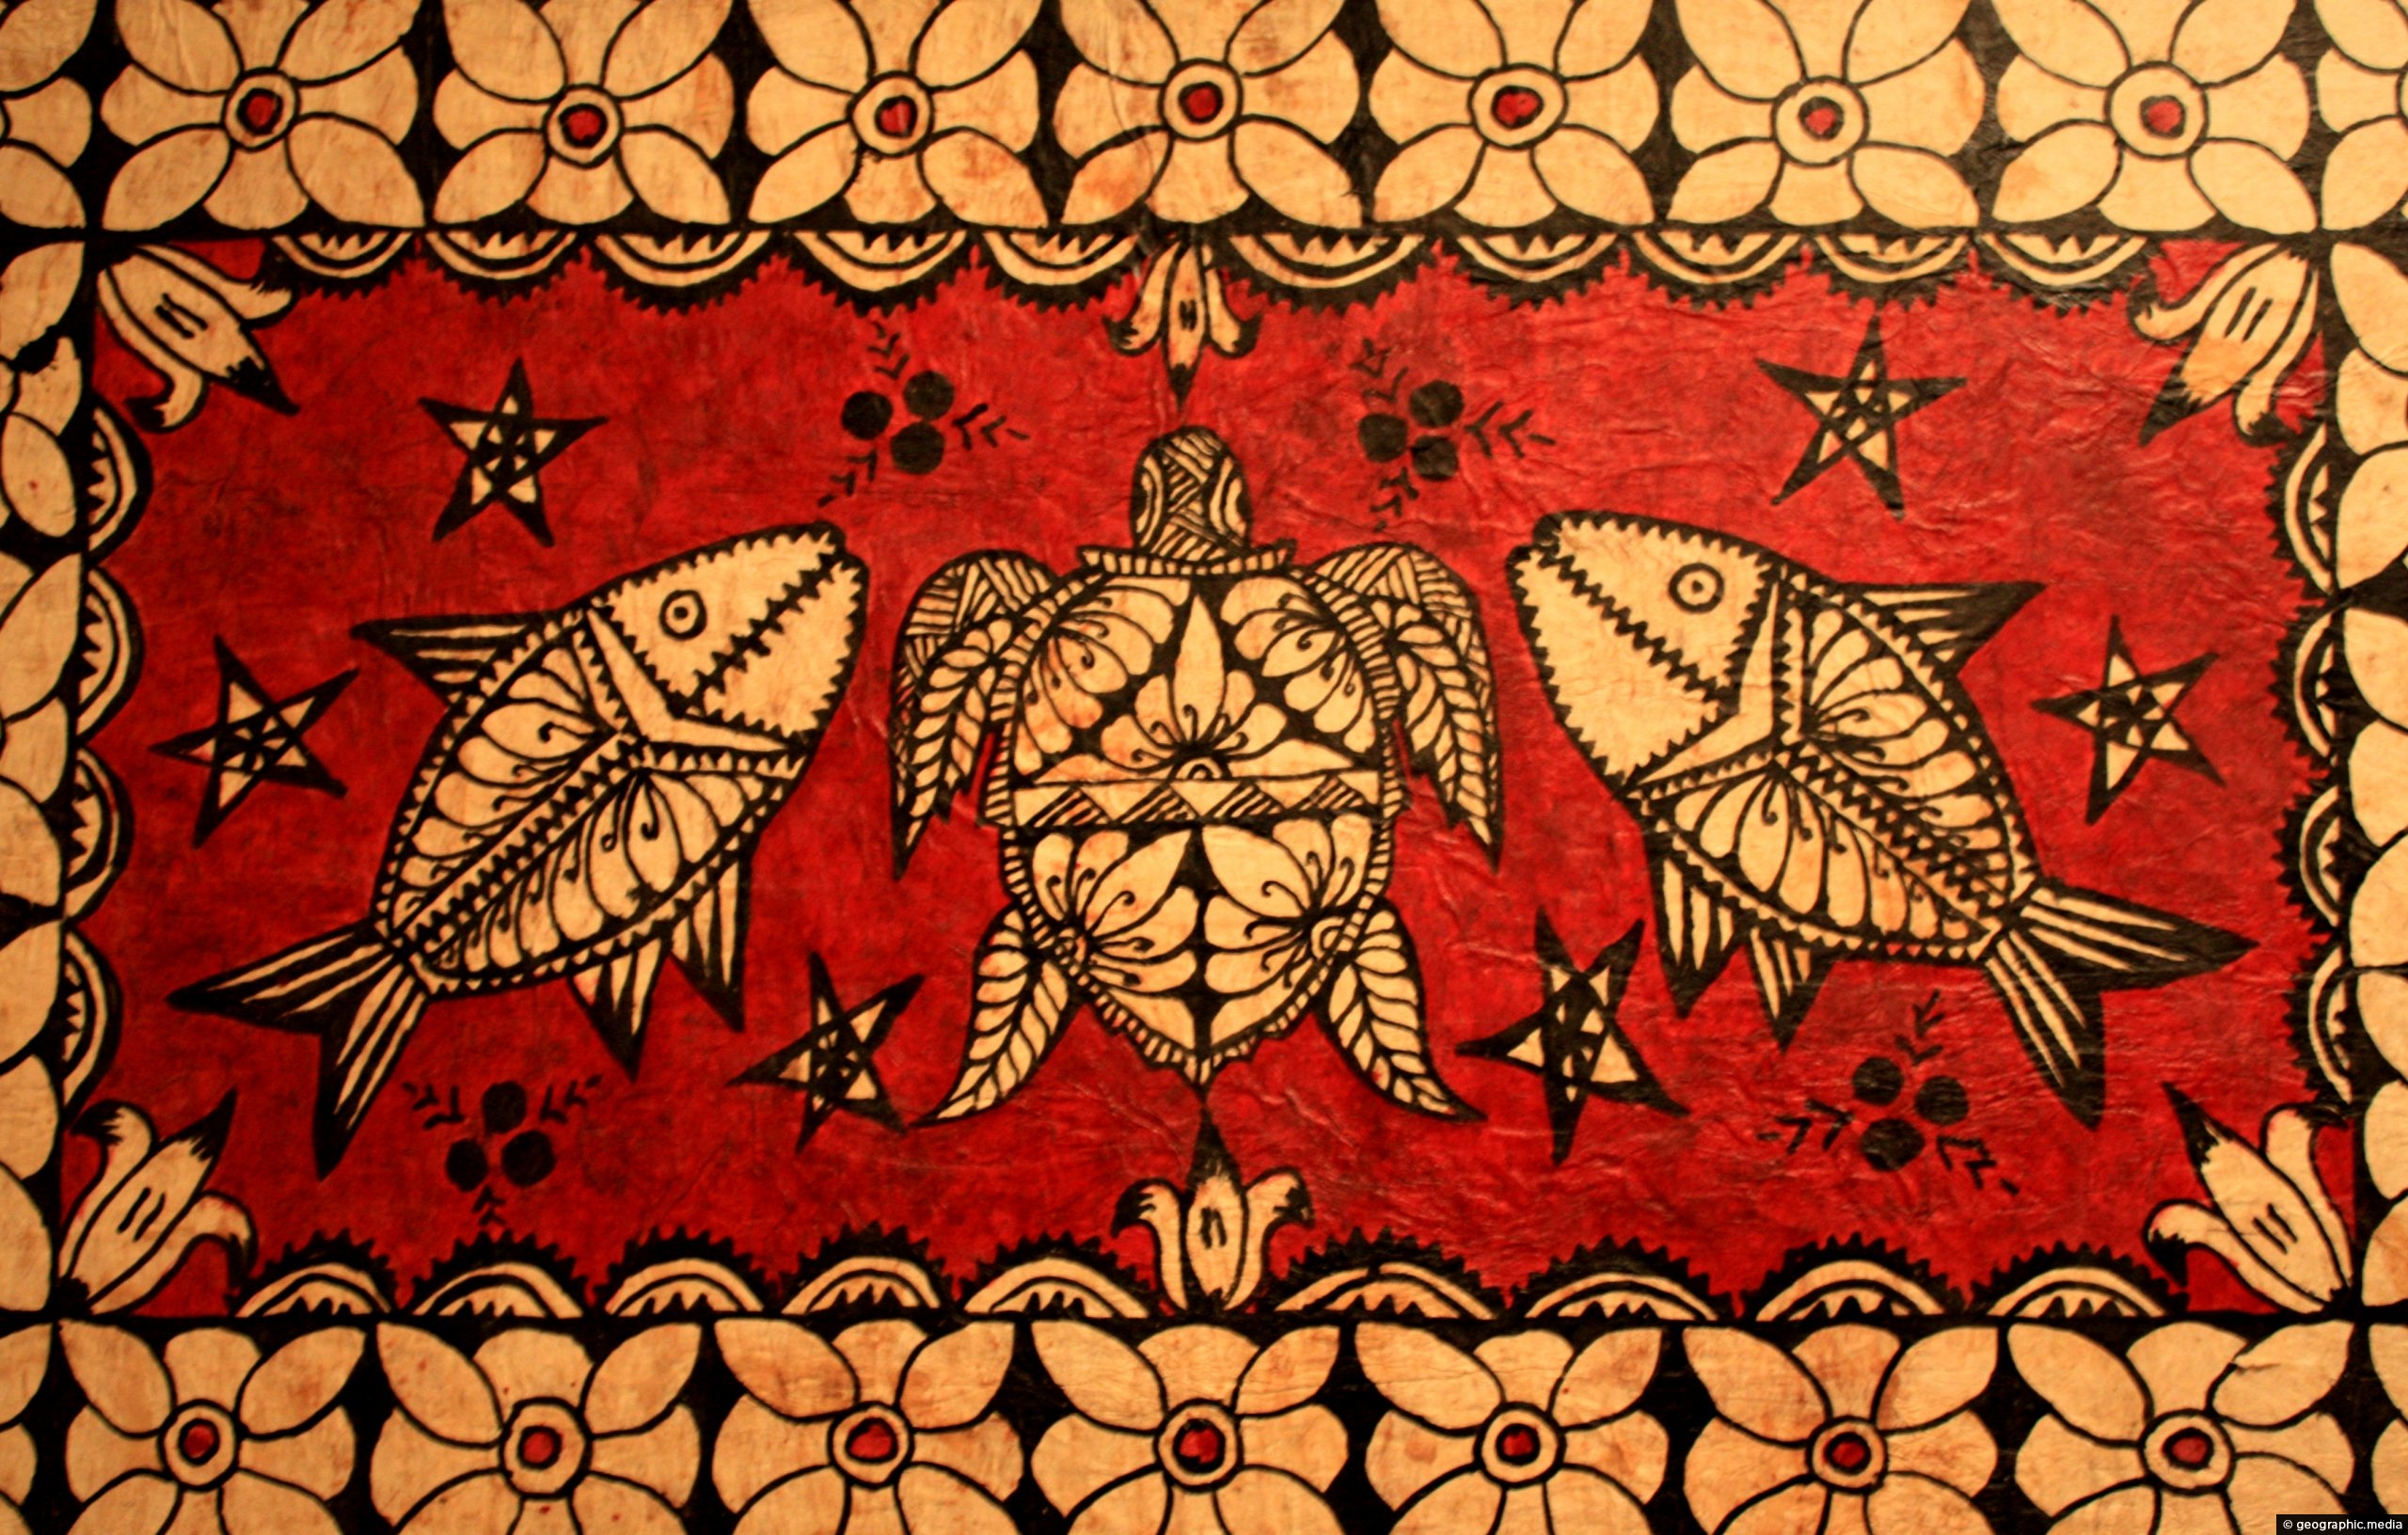 Tapa Cloth from Tonga